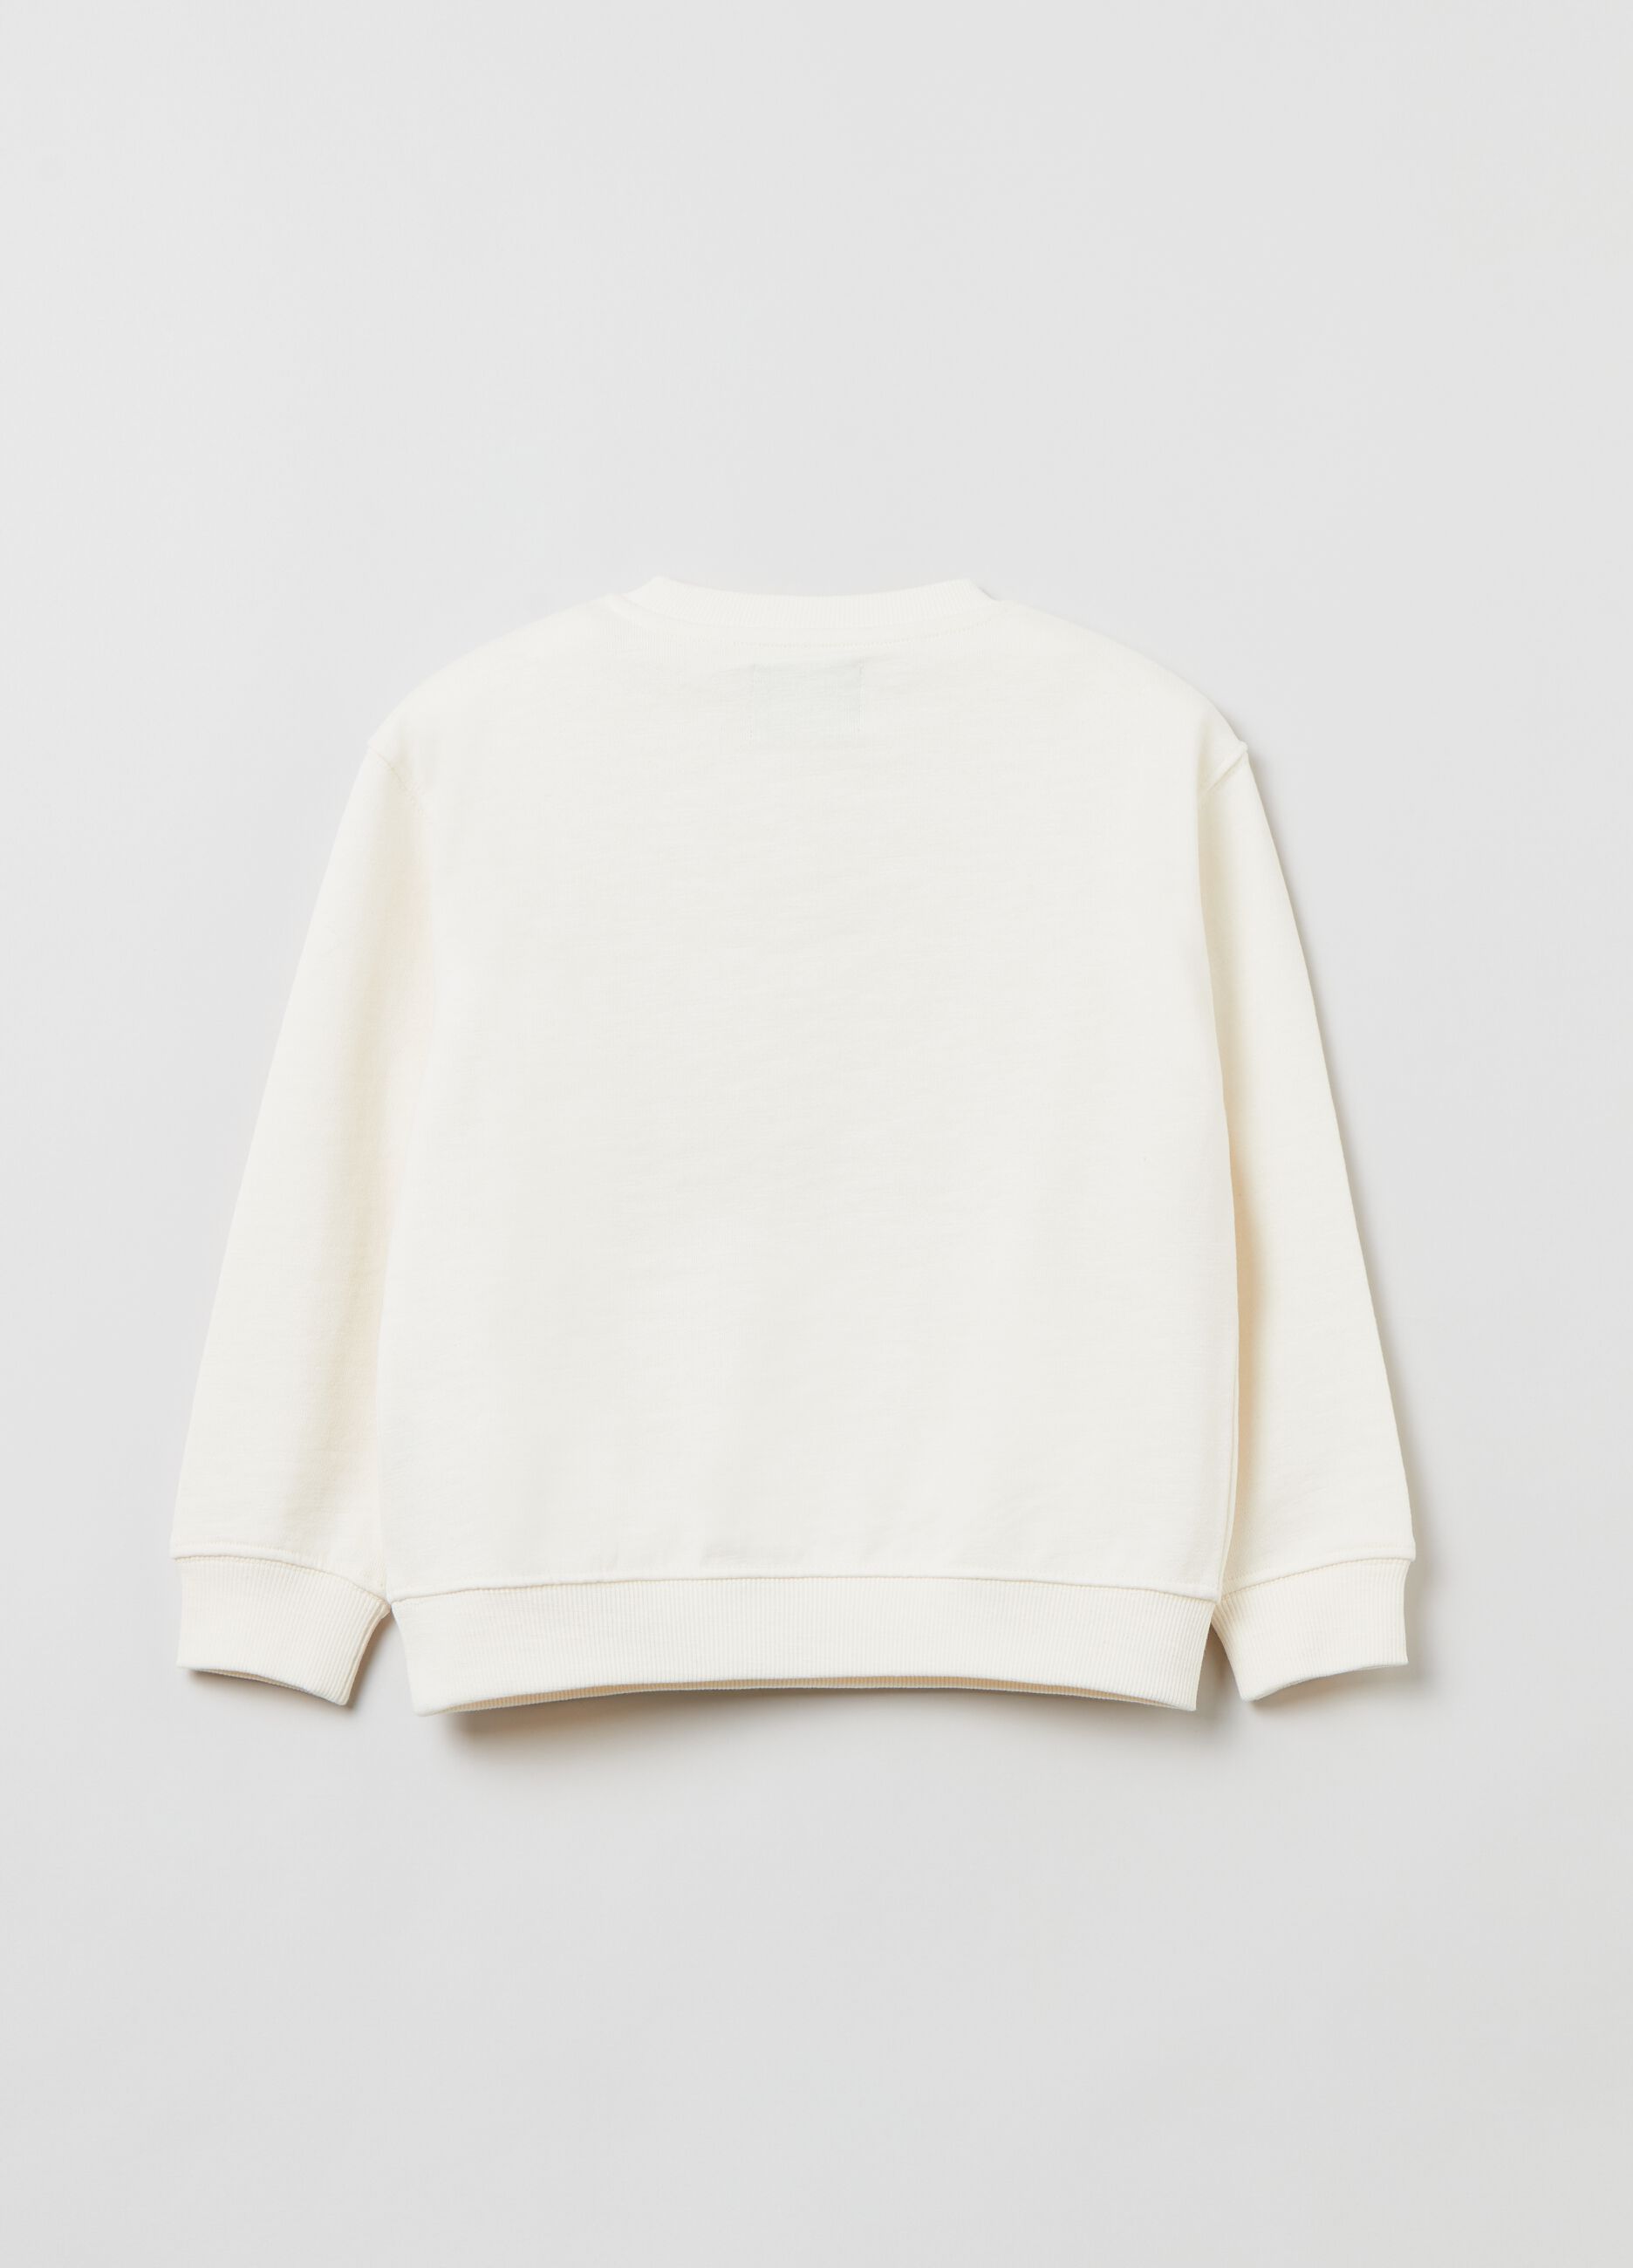 Cotton sweatshirt with Grand&Hills print